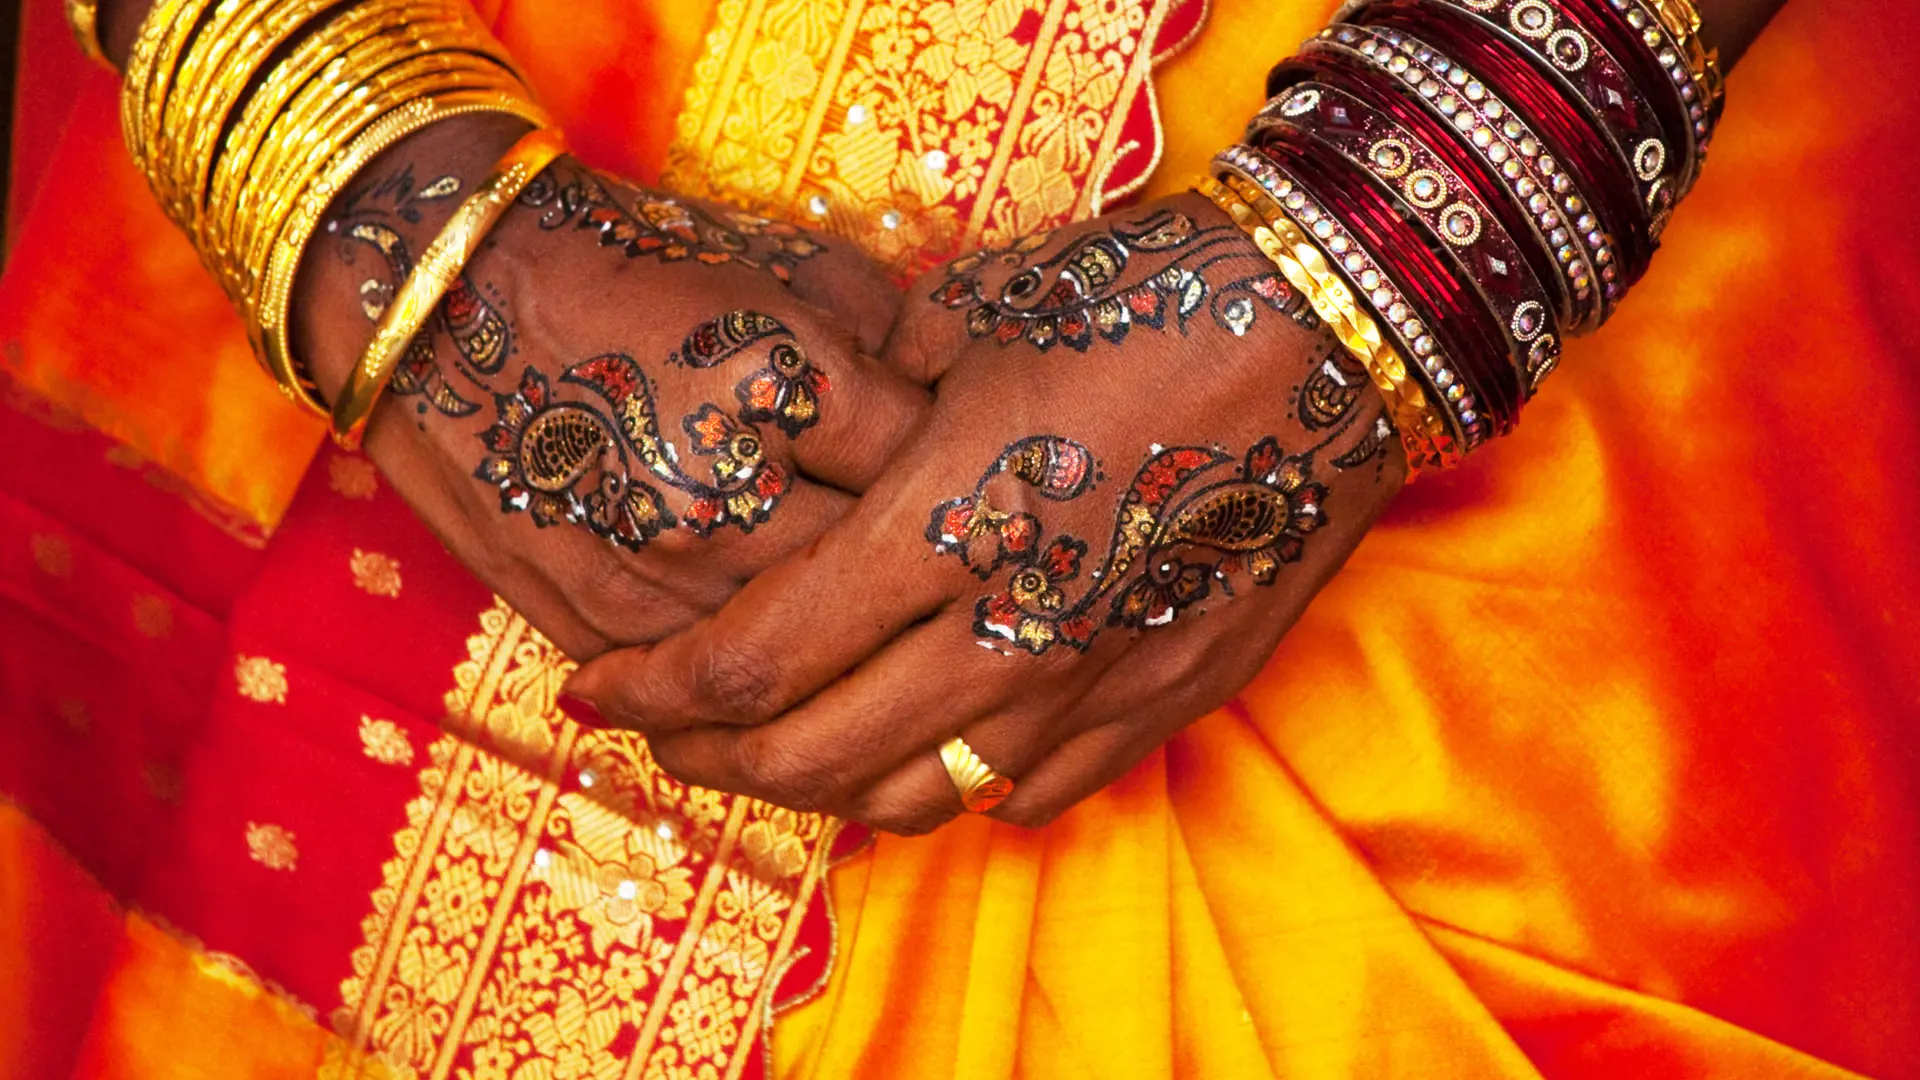 wedding pattern on hands.jpg